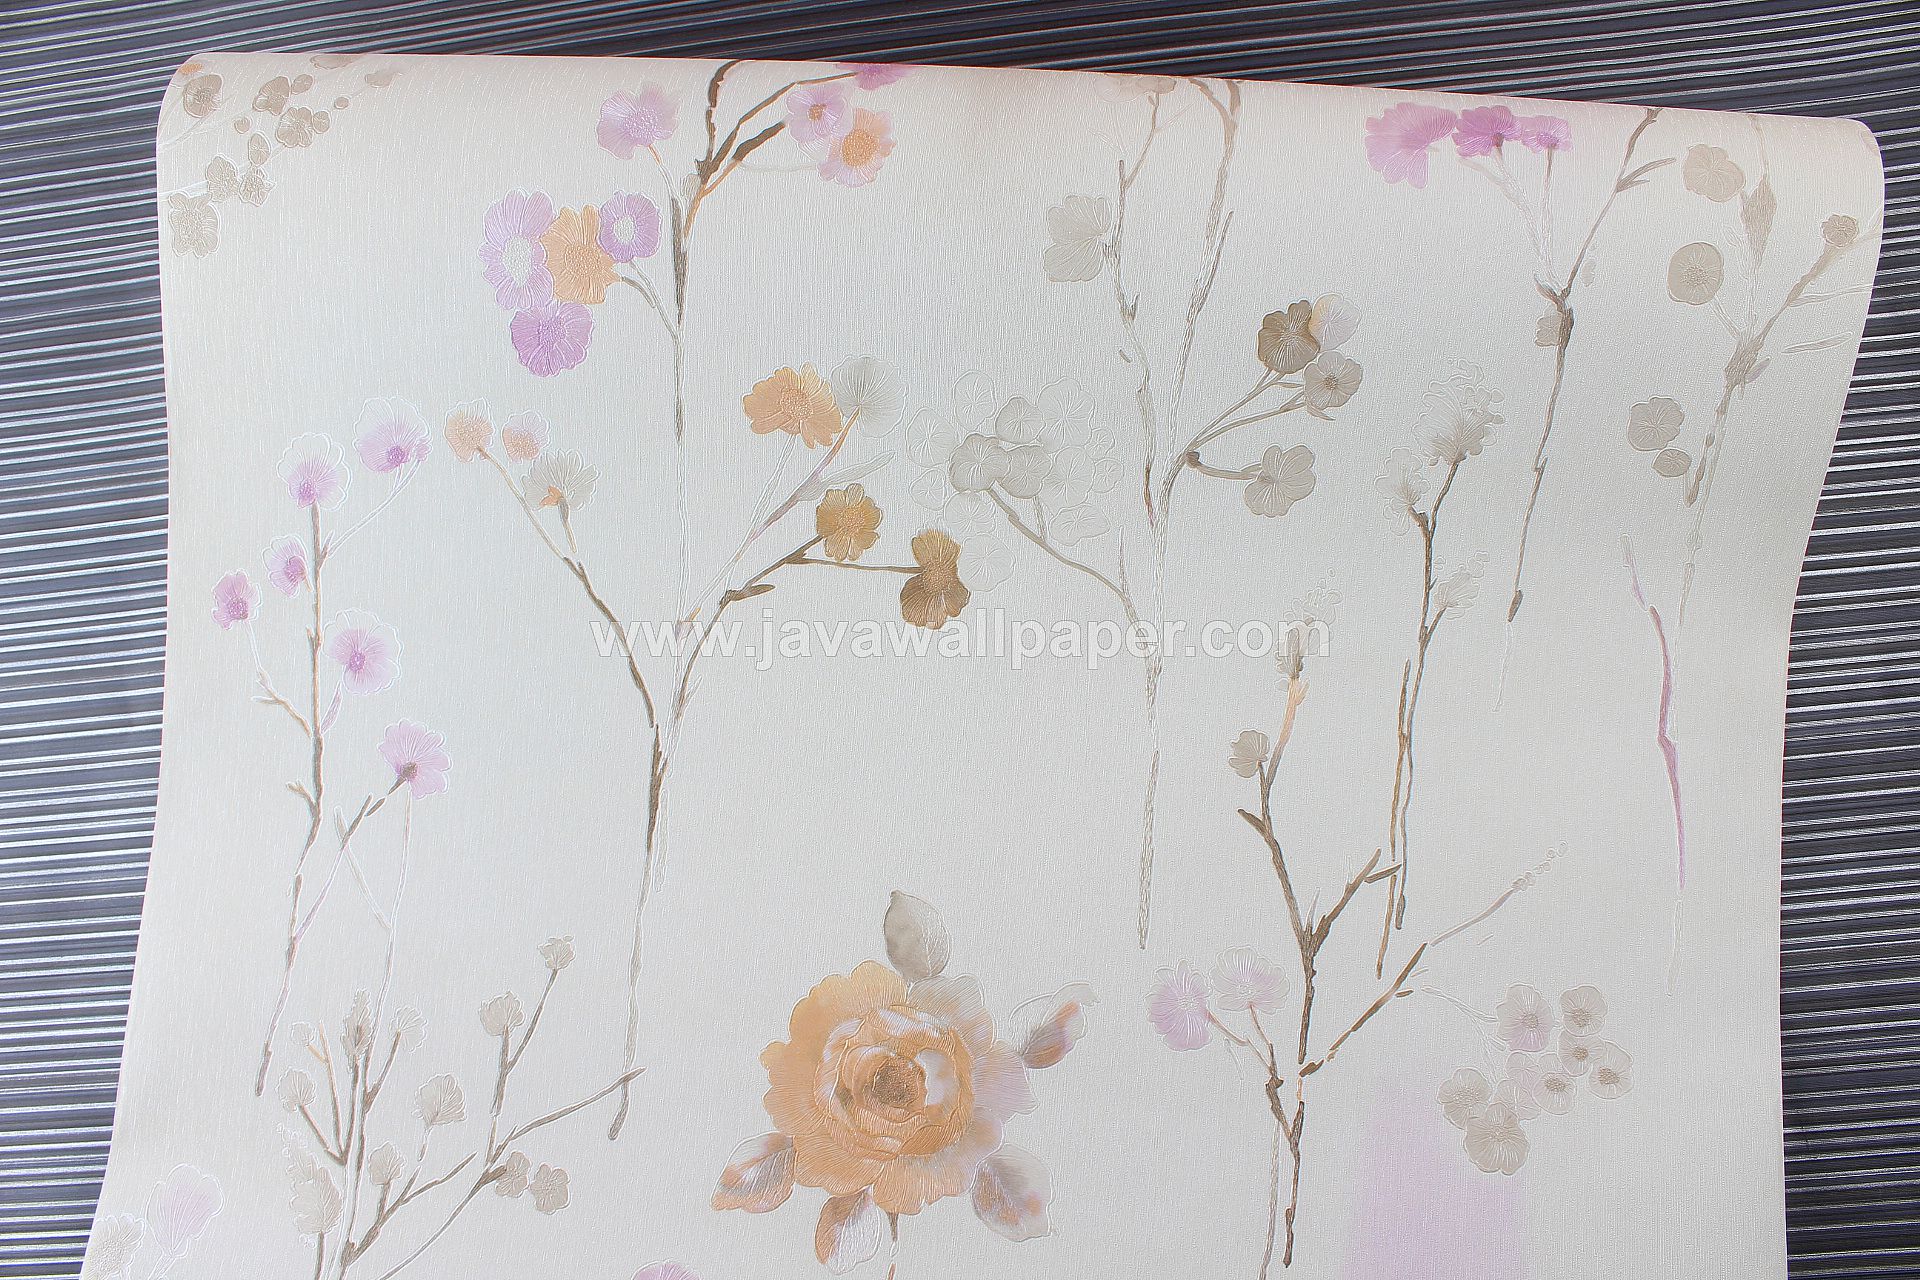  Wallpaper  Dinding  Bunga Putih  Peach Ungu  CL D2819 2 Java 